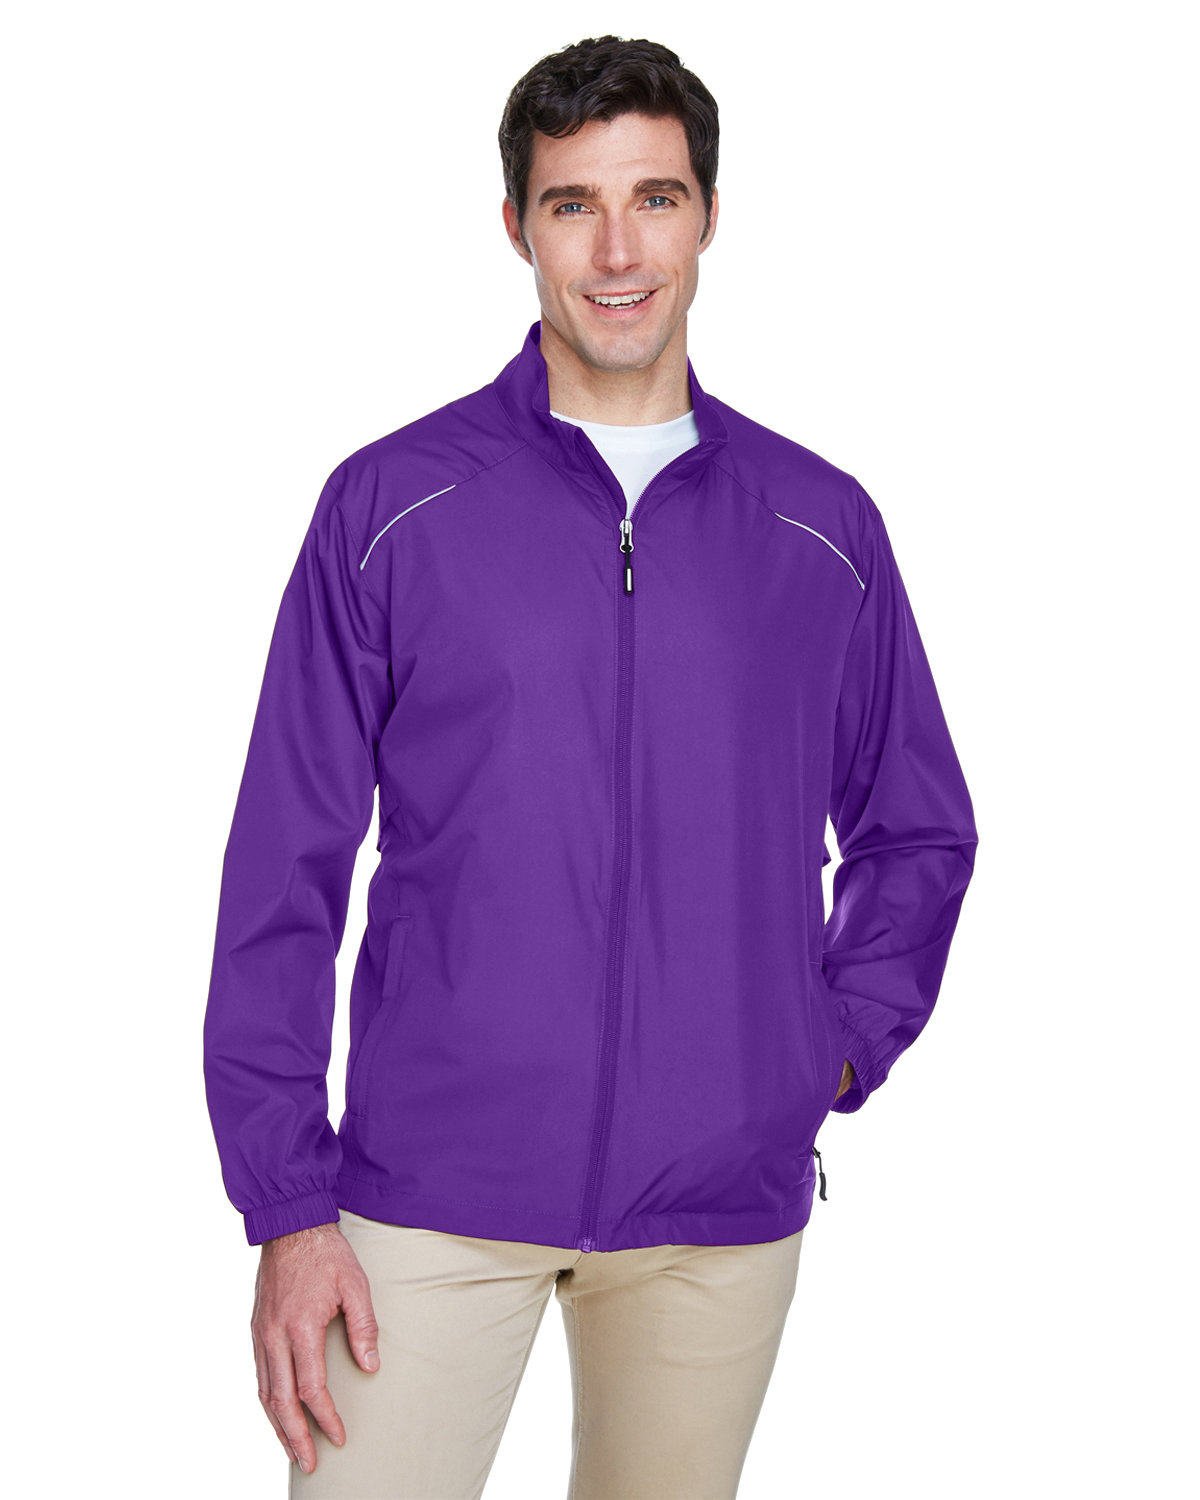 CORE365 Men's Techno Lite Motivate Unlined Lightweight Jacket campus purple 